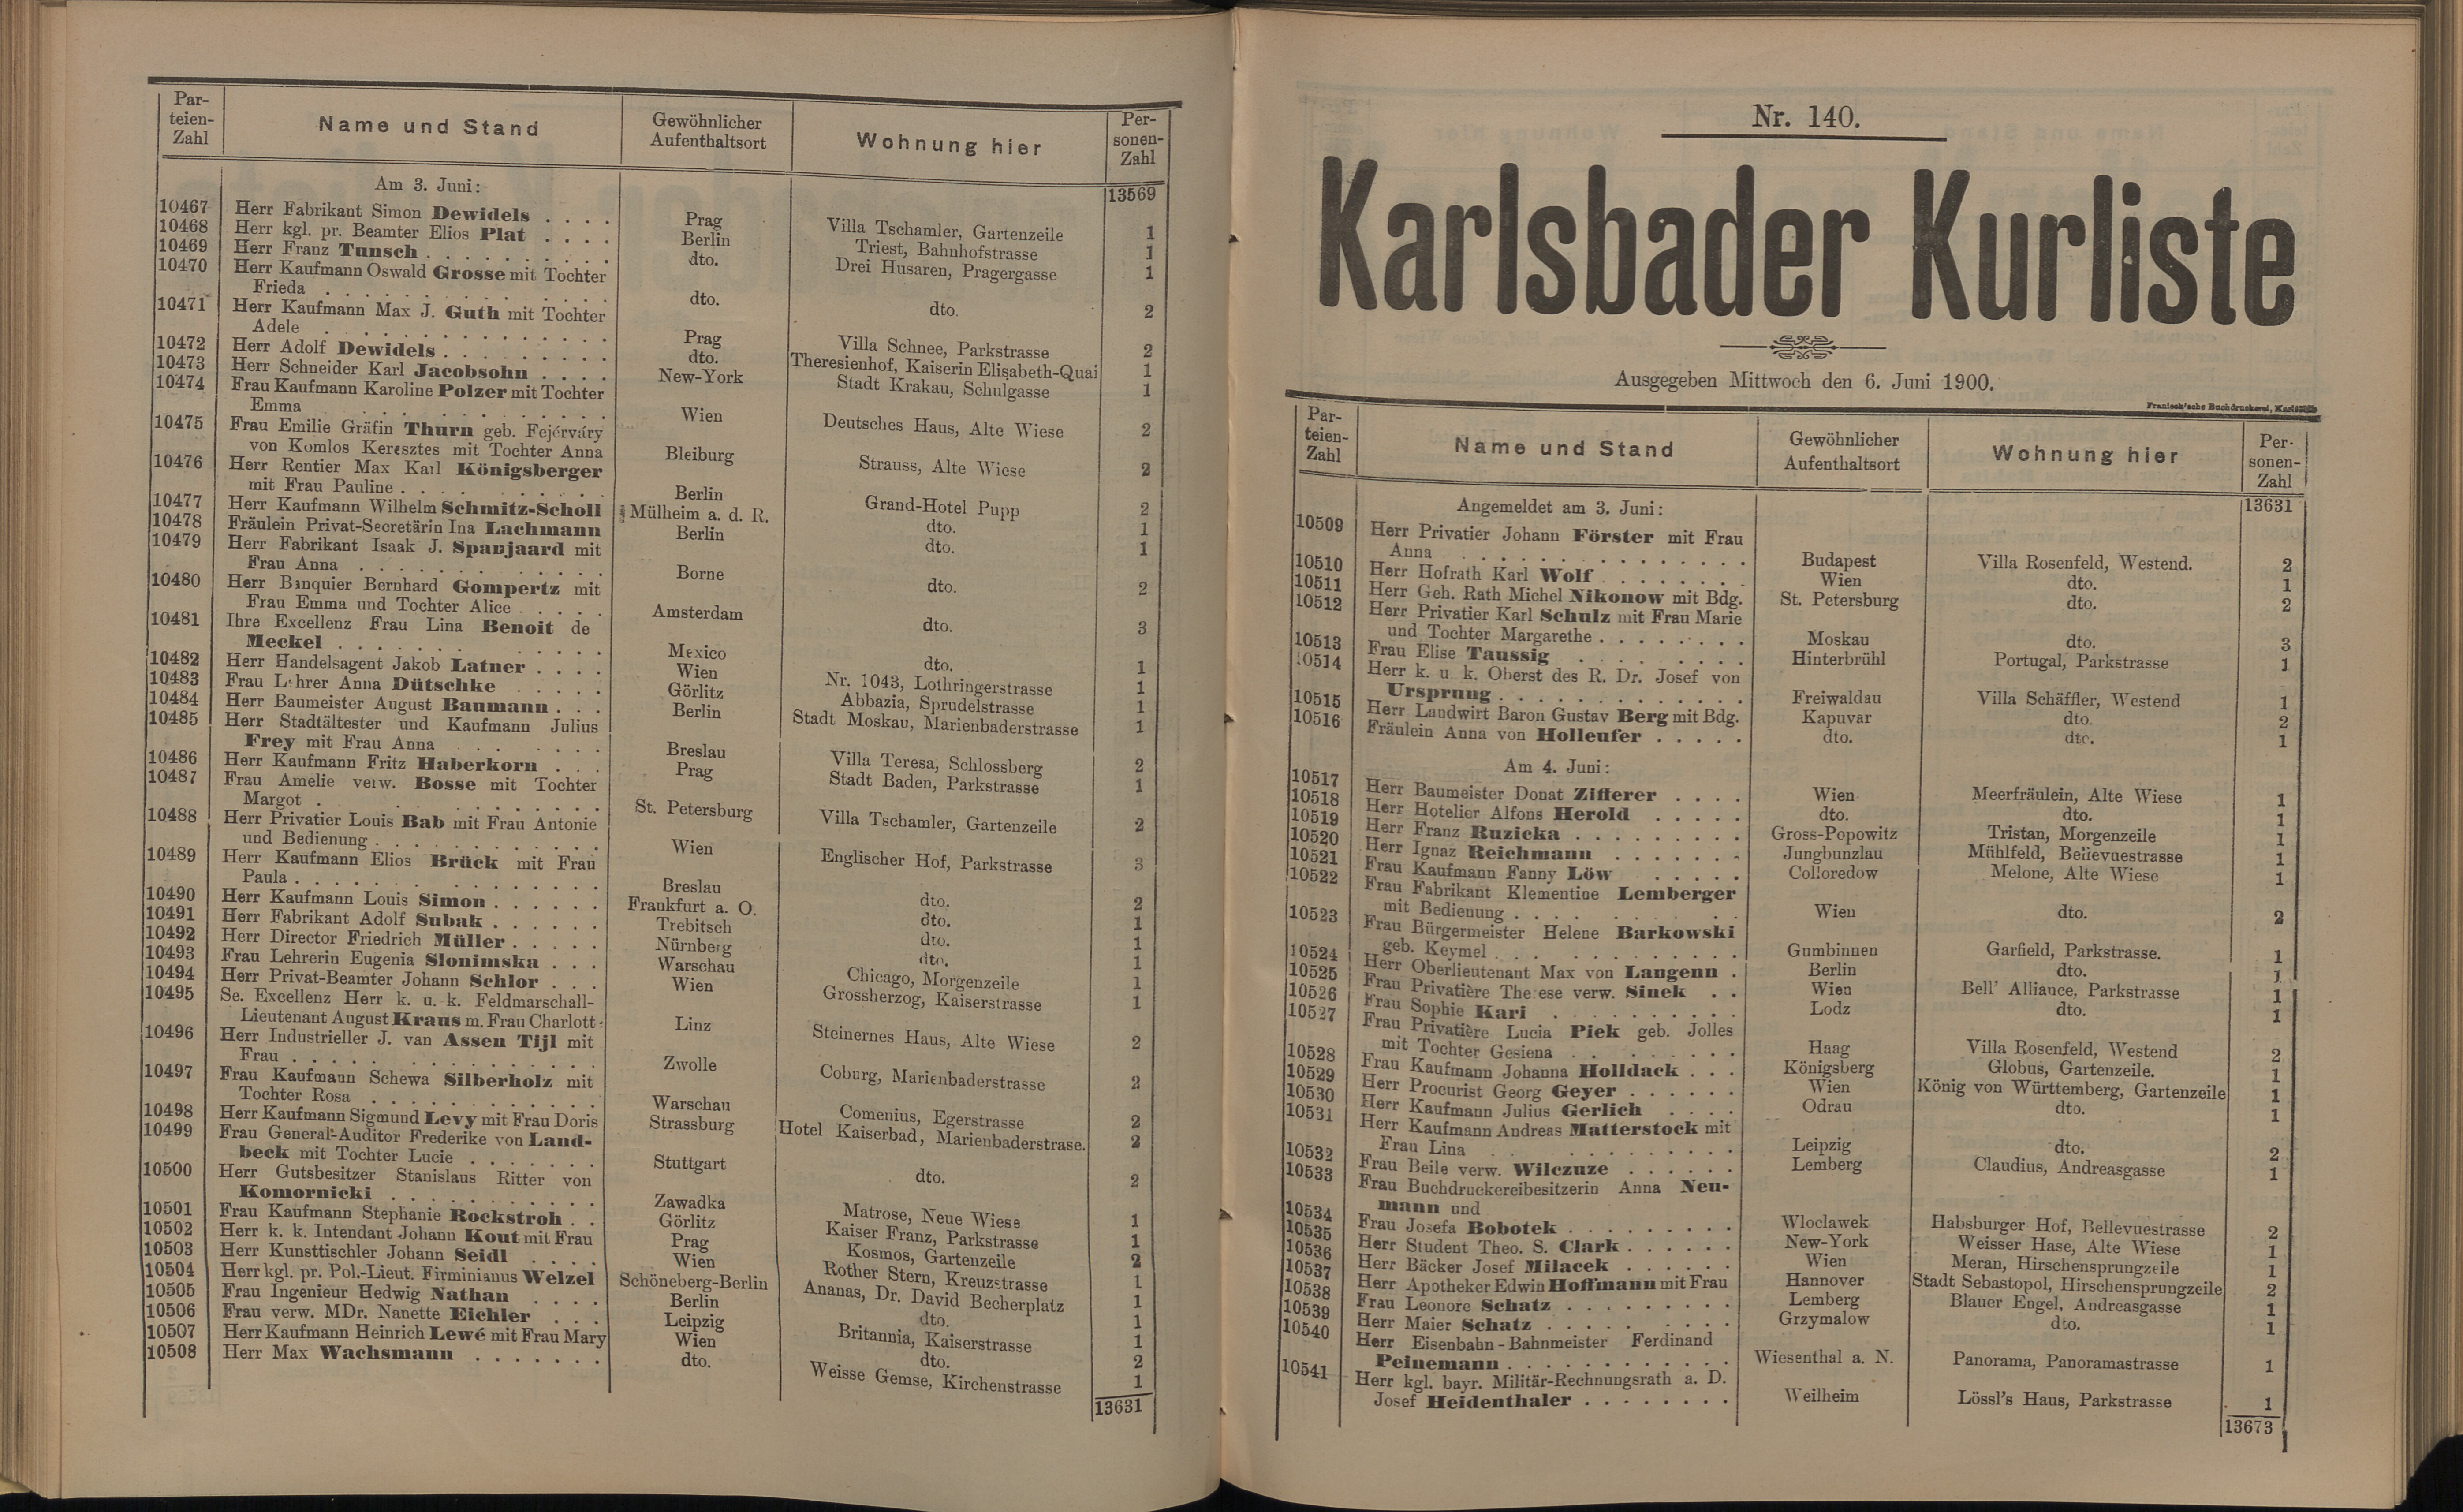 160. soap-kv_knihovna_karlsbader-kurliste-1900_1610